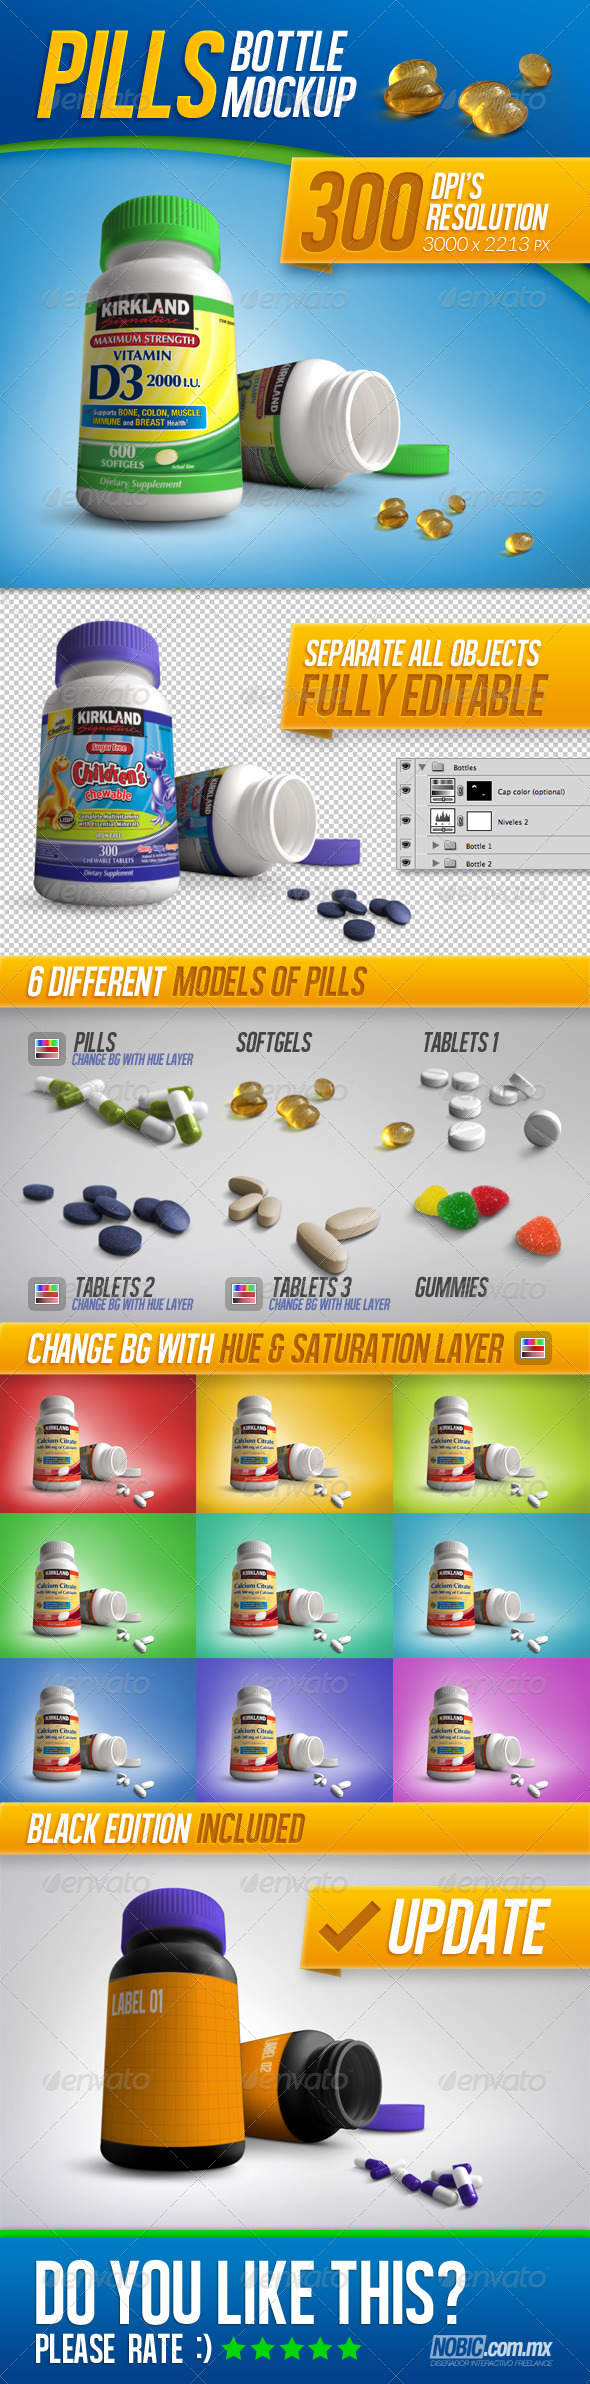 Tablets, Vitamins and Pills Bottle Mockup